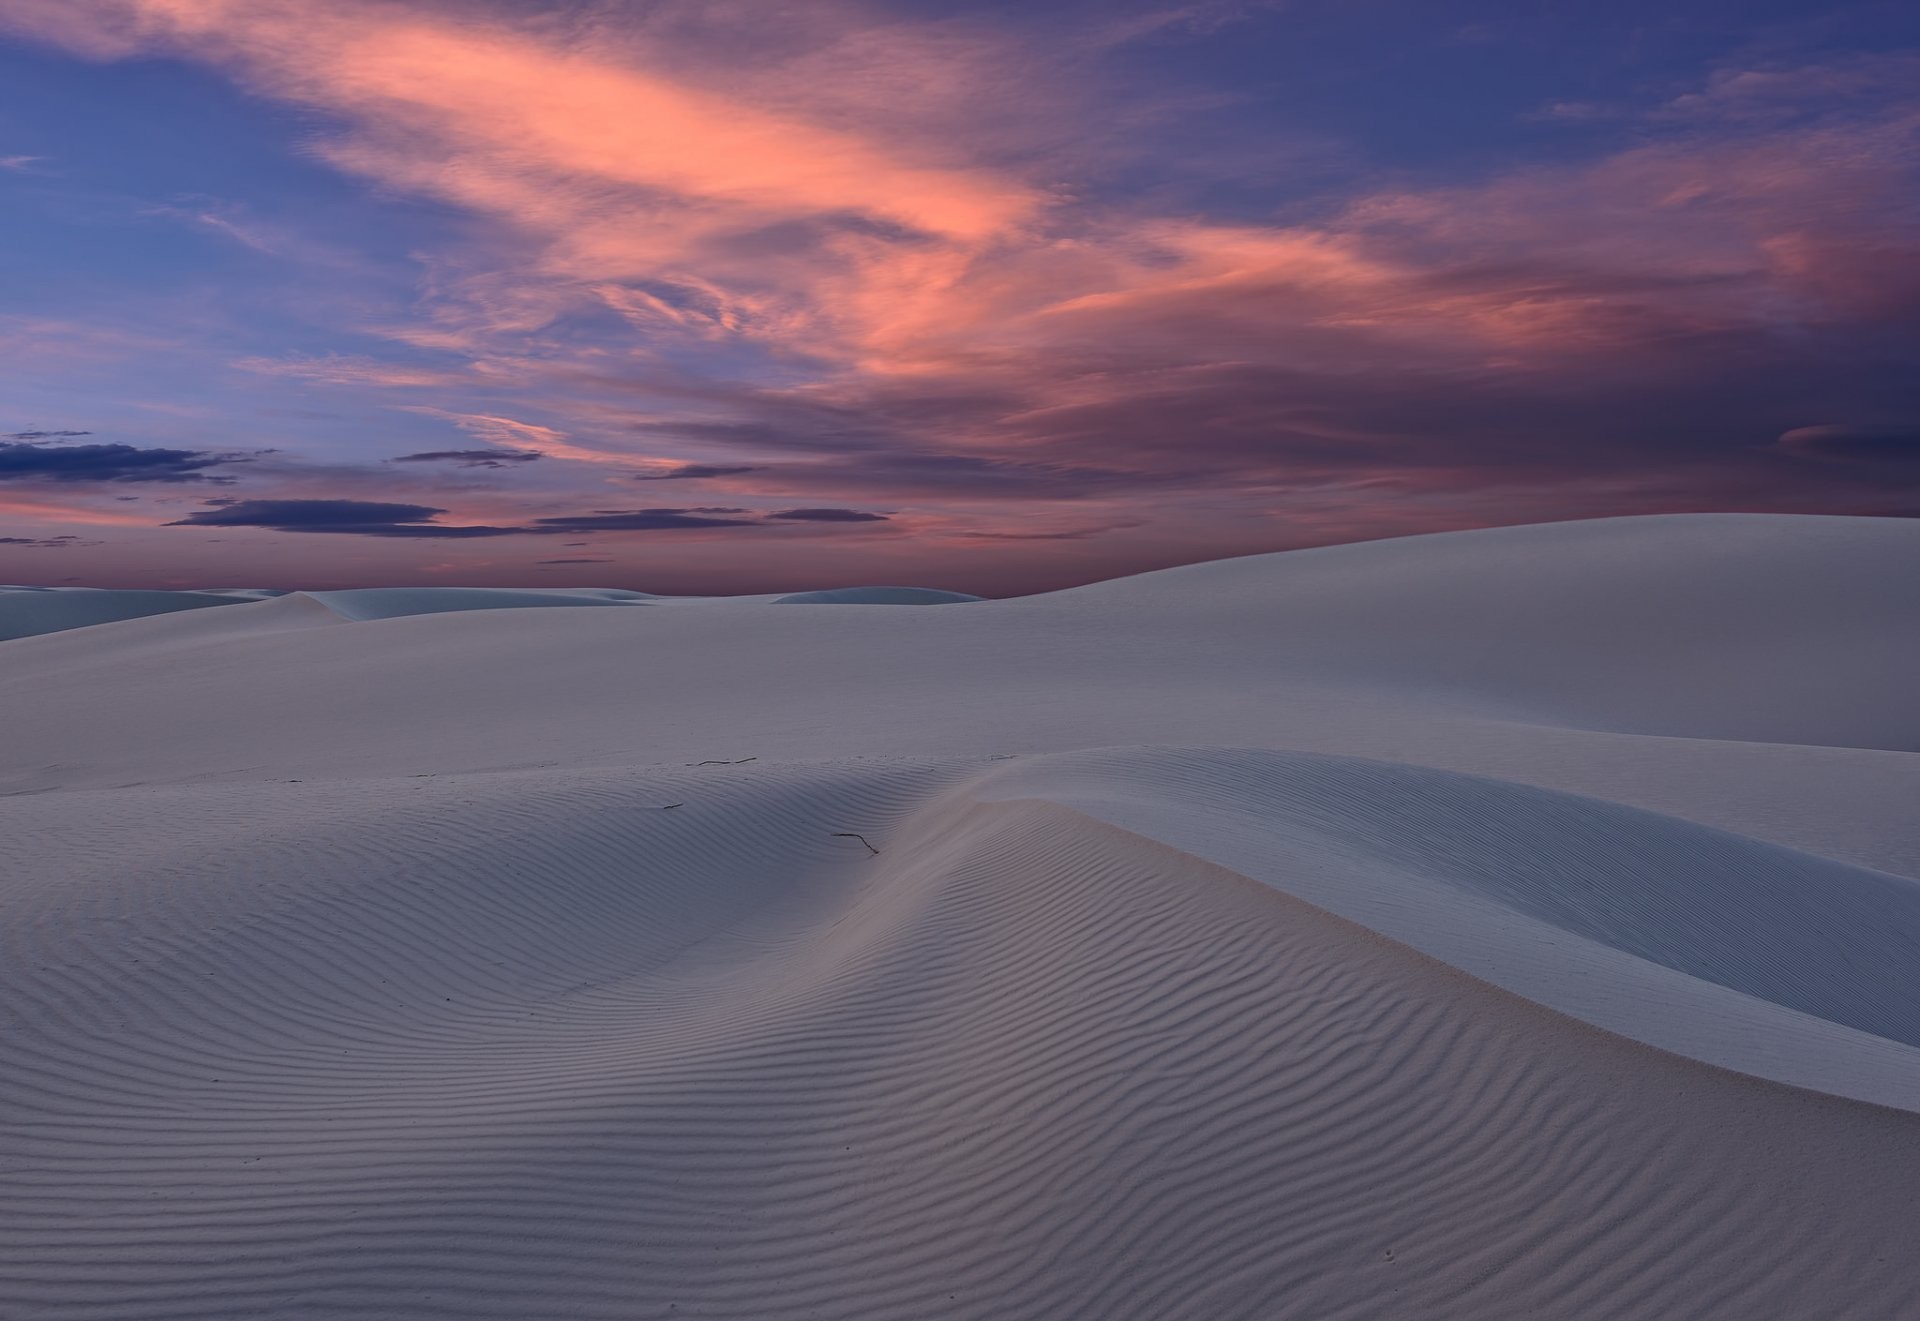 1920x1321 desert sand dune sunset new mexico united states